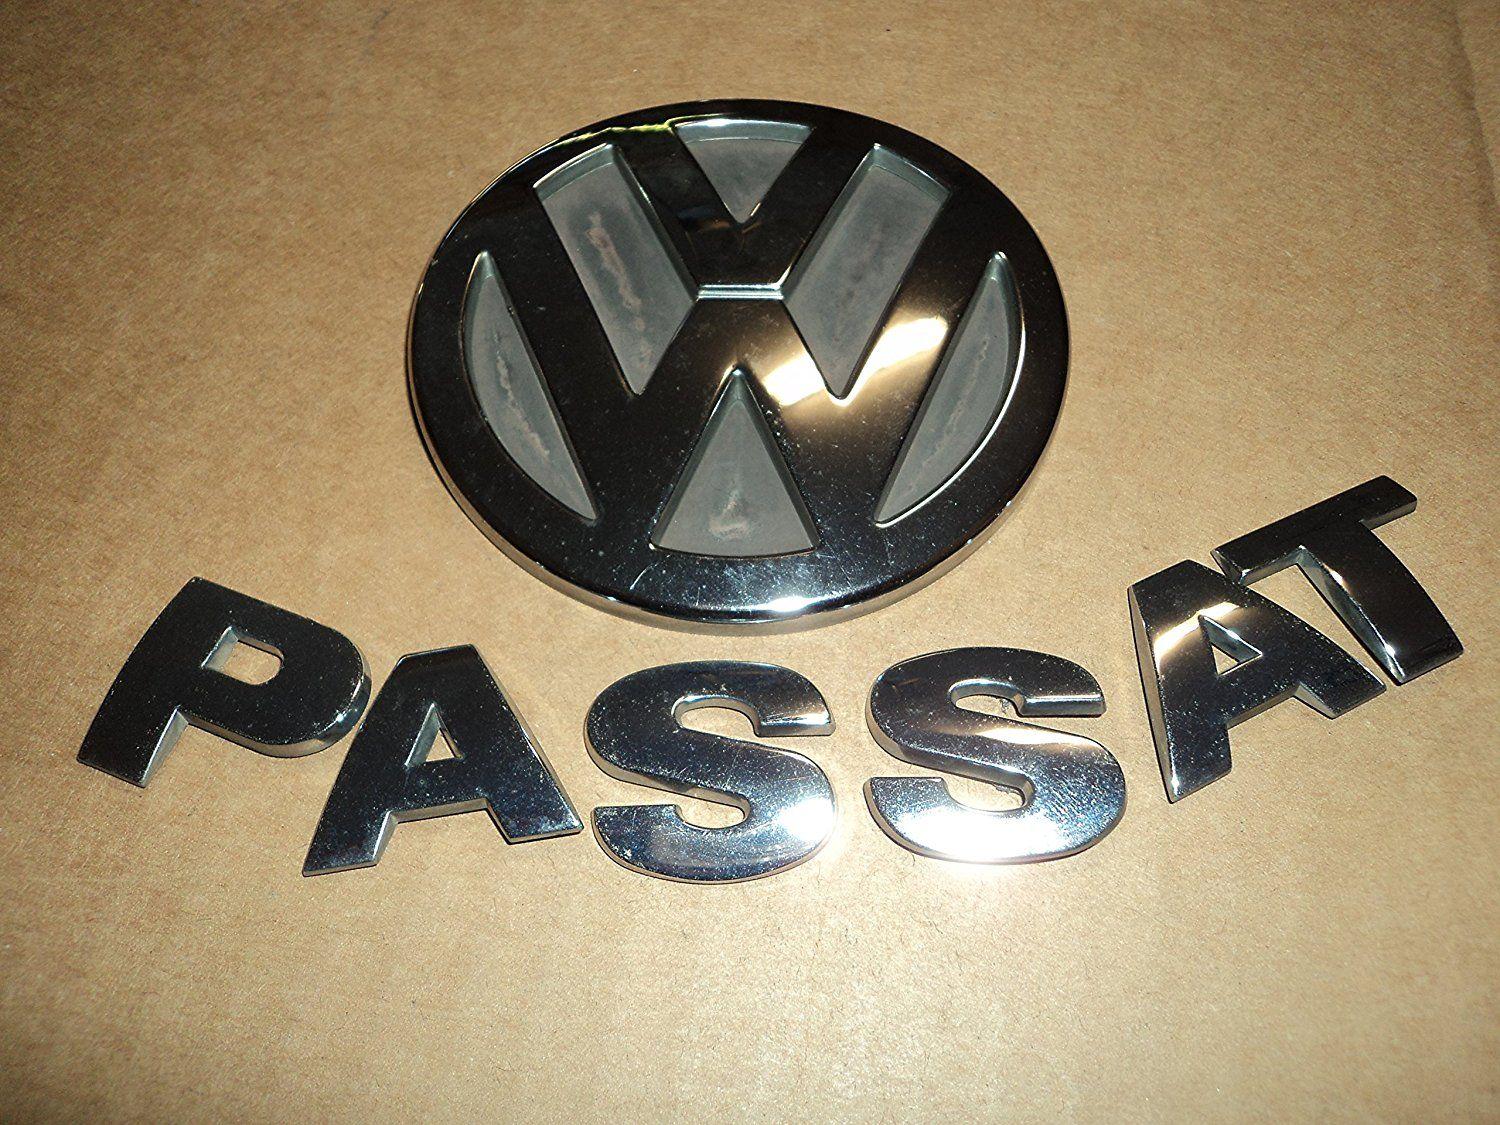 Passat Logo - Cheap Vw Passat Badge, find Vw Passat Badge deals on line at Alibaba.com